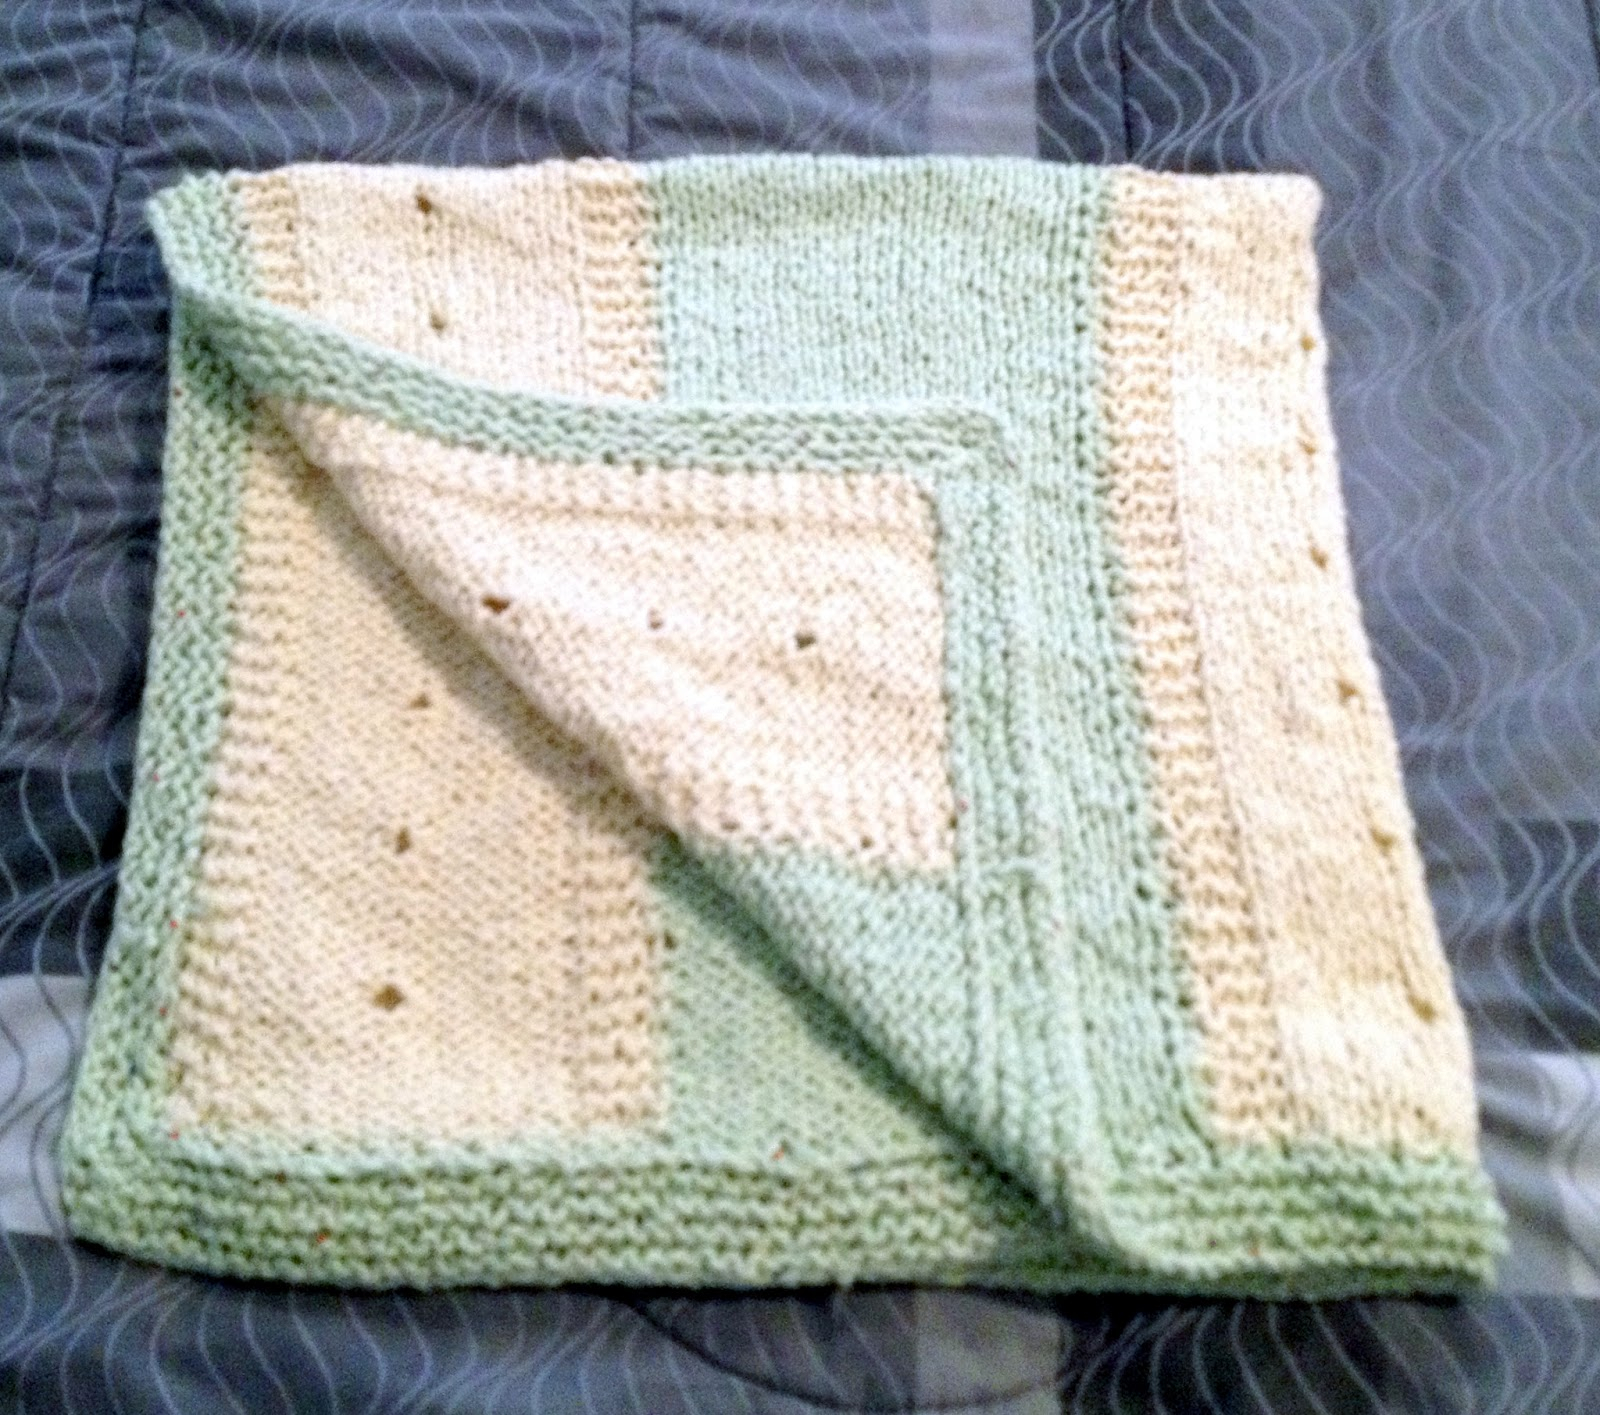 Knitting Pattern Free Download Striped Ba Blanket With Eyelets Knitting Pattern Free Download